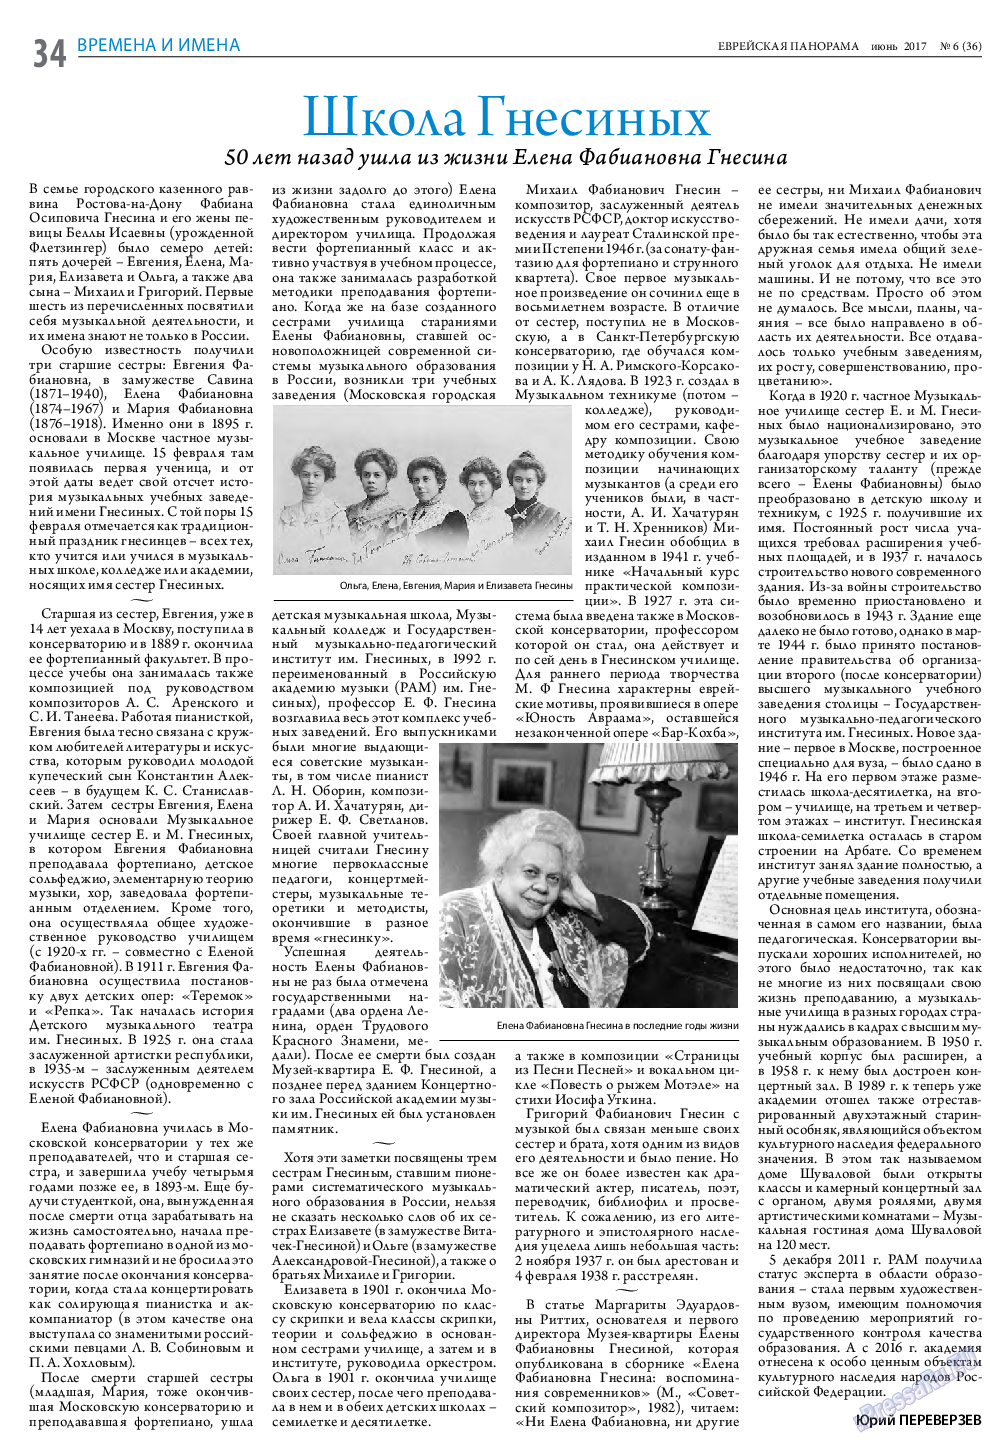 Еврейская панорама, газета. 2017 №6 стр.34